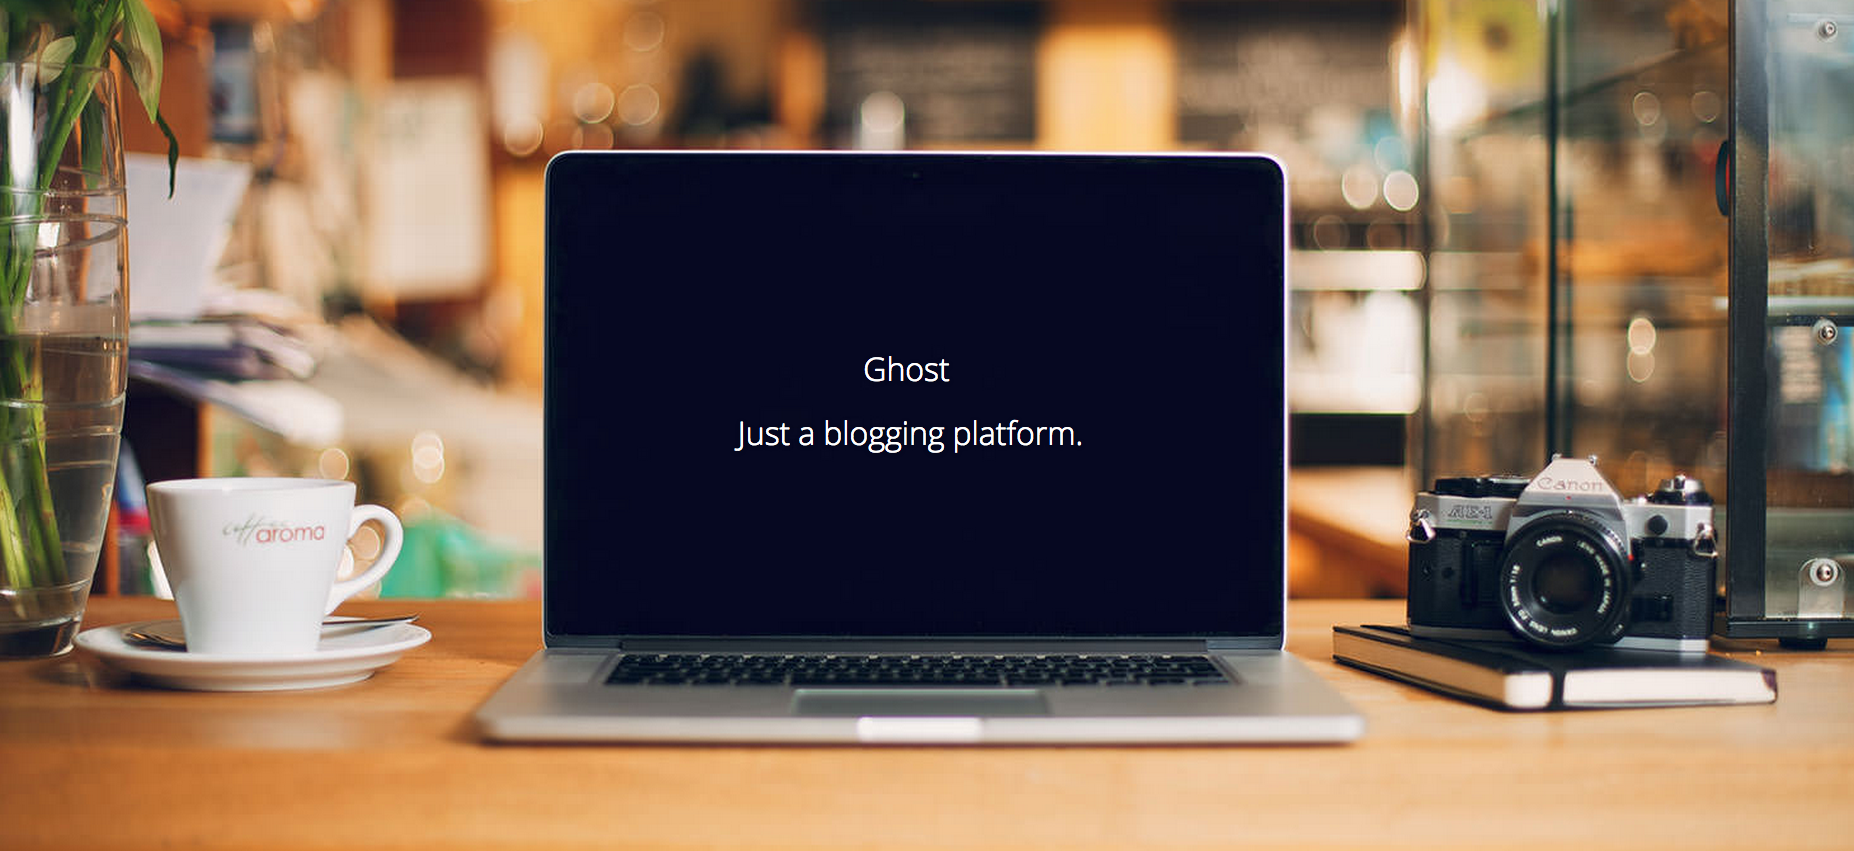 ghost just a blogging platform